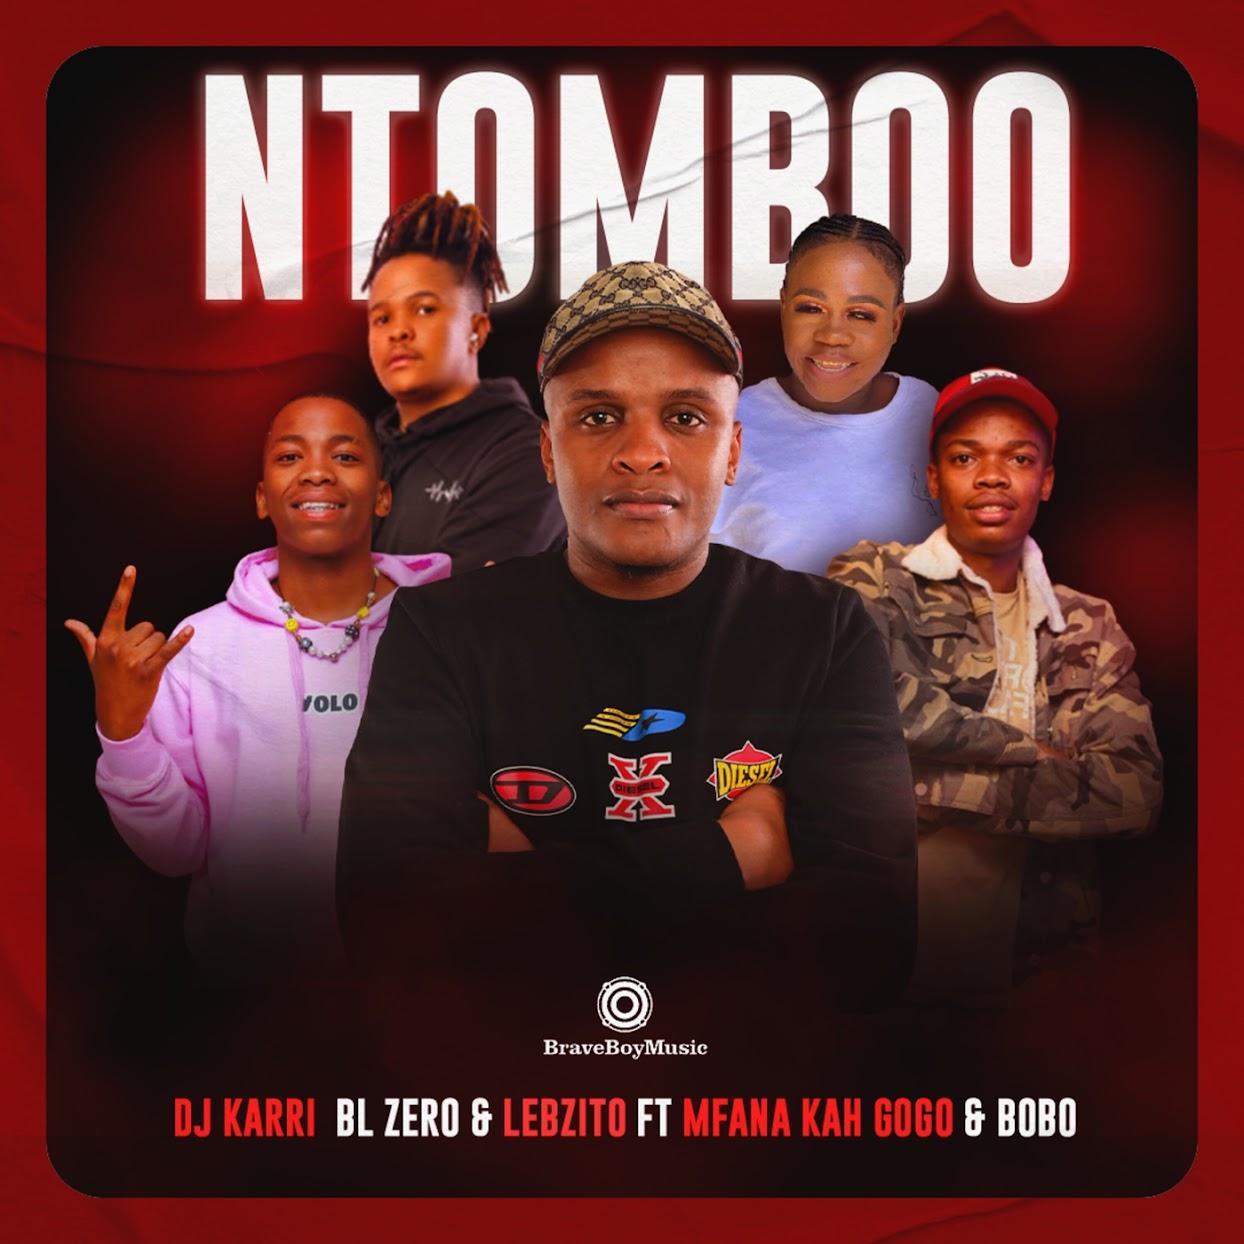 DJ Karri, BL Zero & Lebzito – Ntomboo (feat. Mfana Kah Gogo & Bobo Mbele)